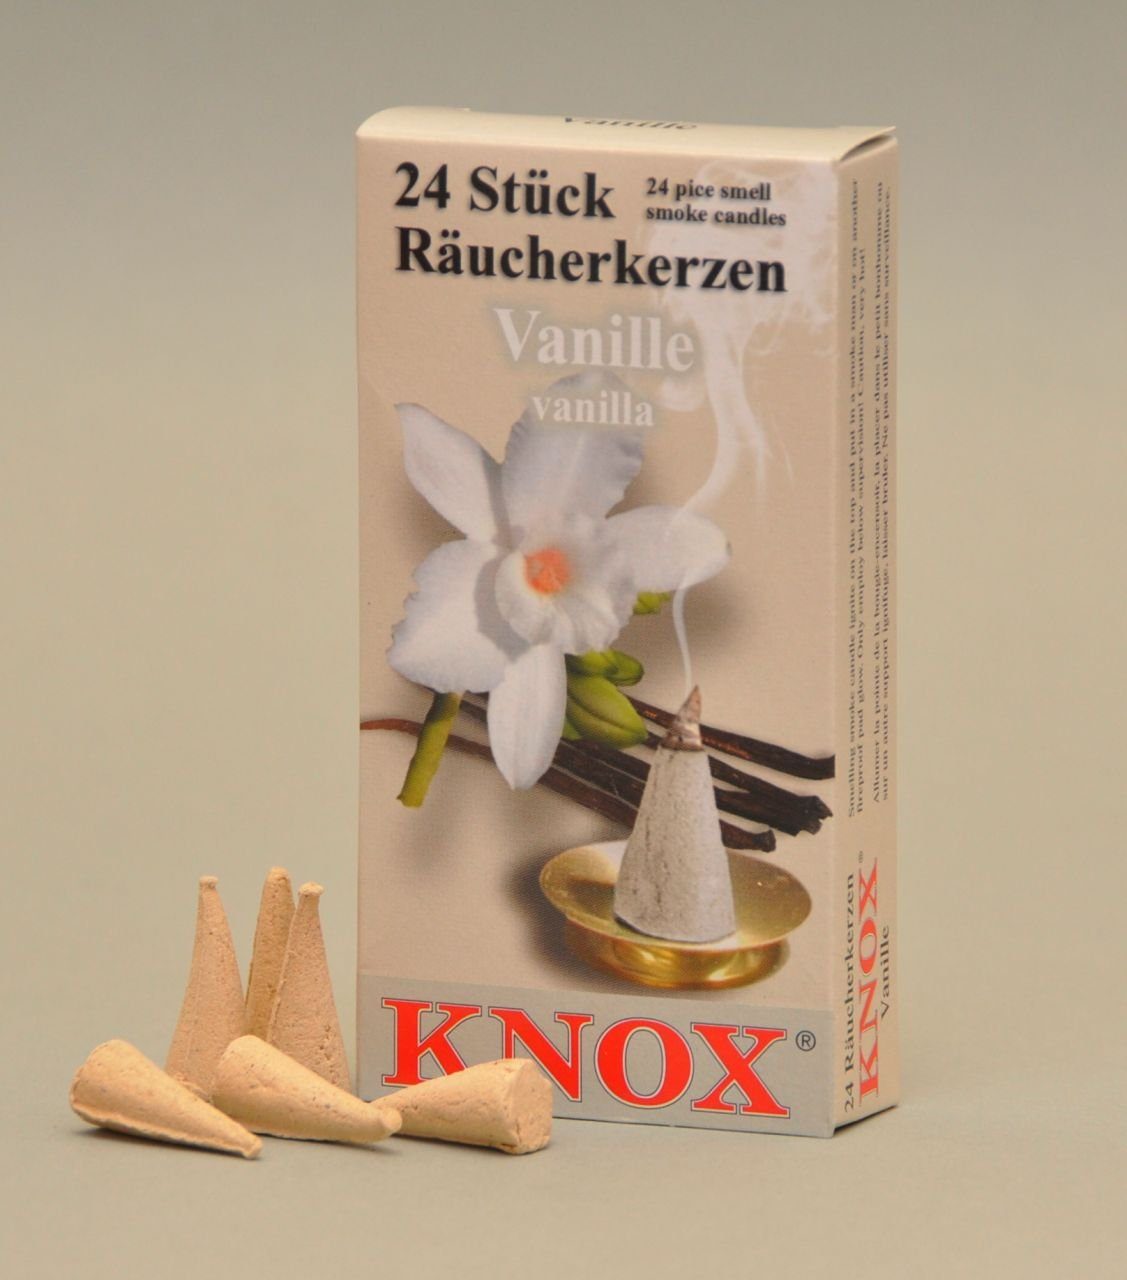 KNOX Räucherhaus Knox Räucherkerzen - Vanille Stück 24